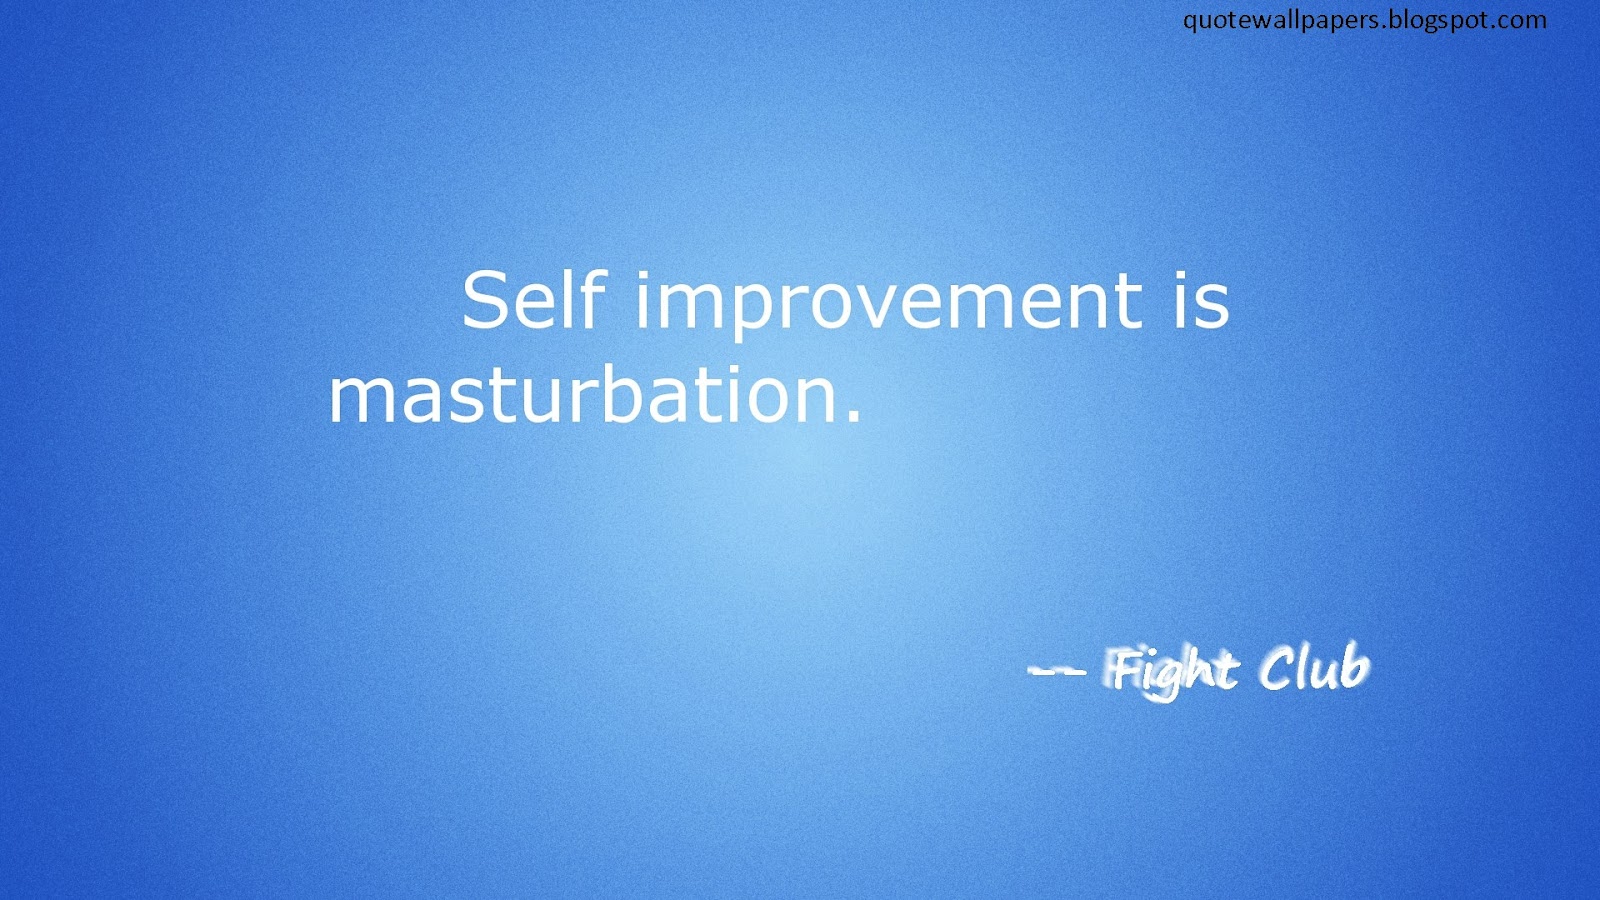 Self improvement is masturbation